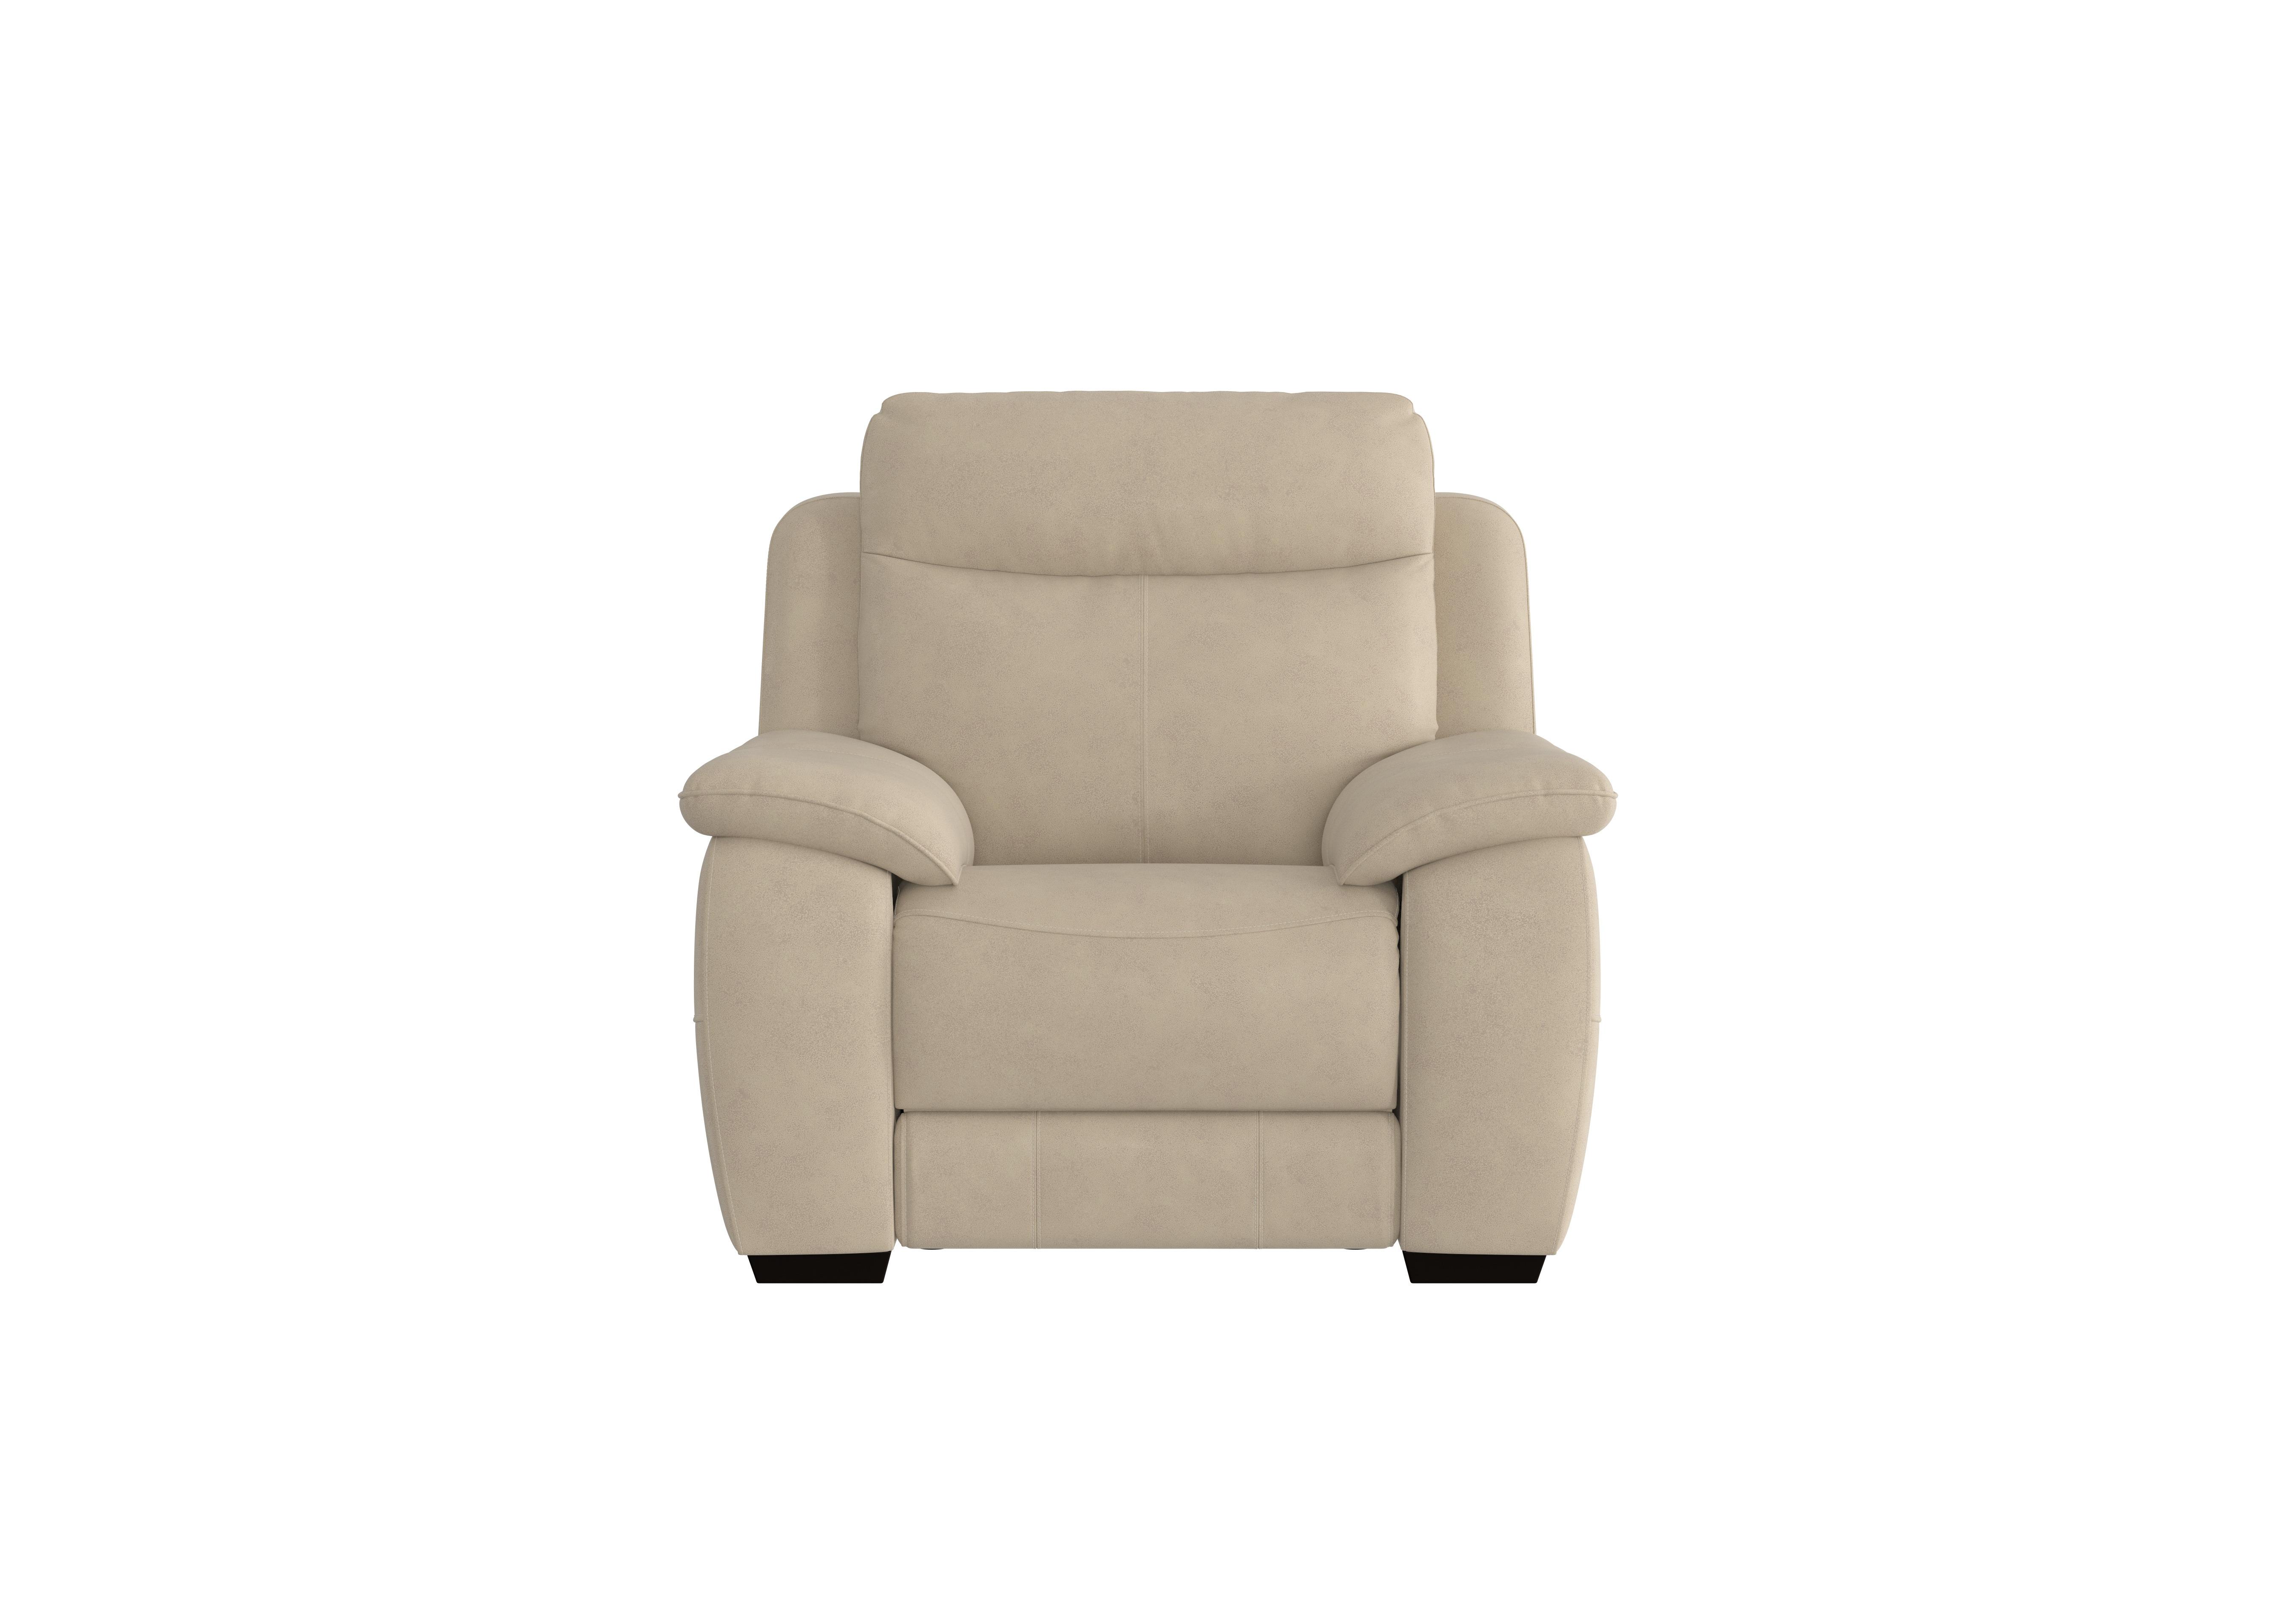 Starlight Express Fabric Armchair in Bfa-Raf-R20 Oatmeal on Furniture Village